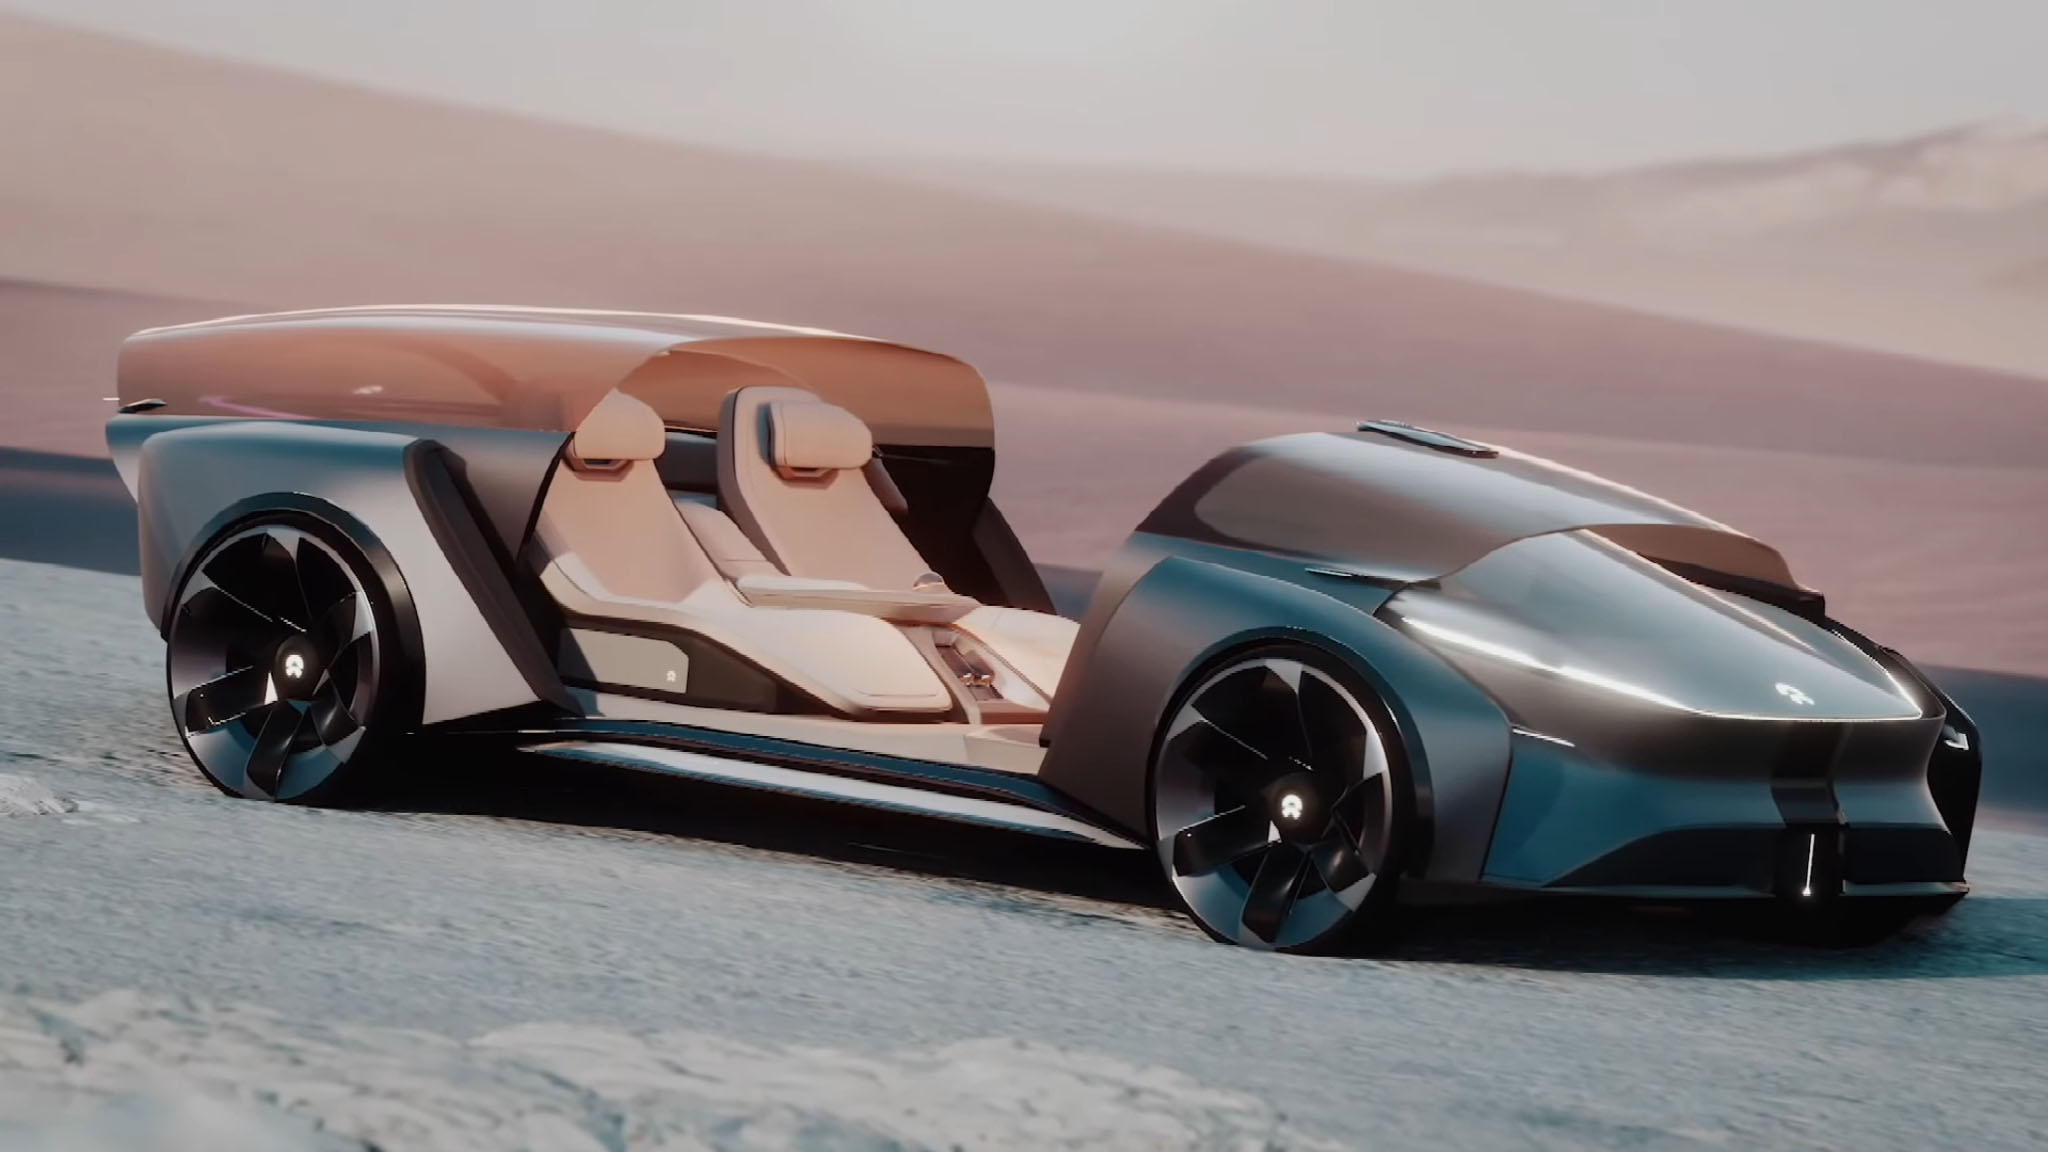 AI Self-driving space car NIO EDEN - futuristic car concept